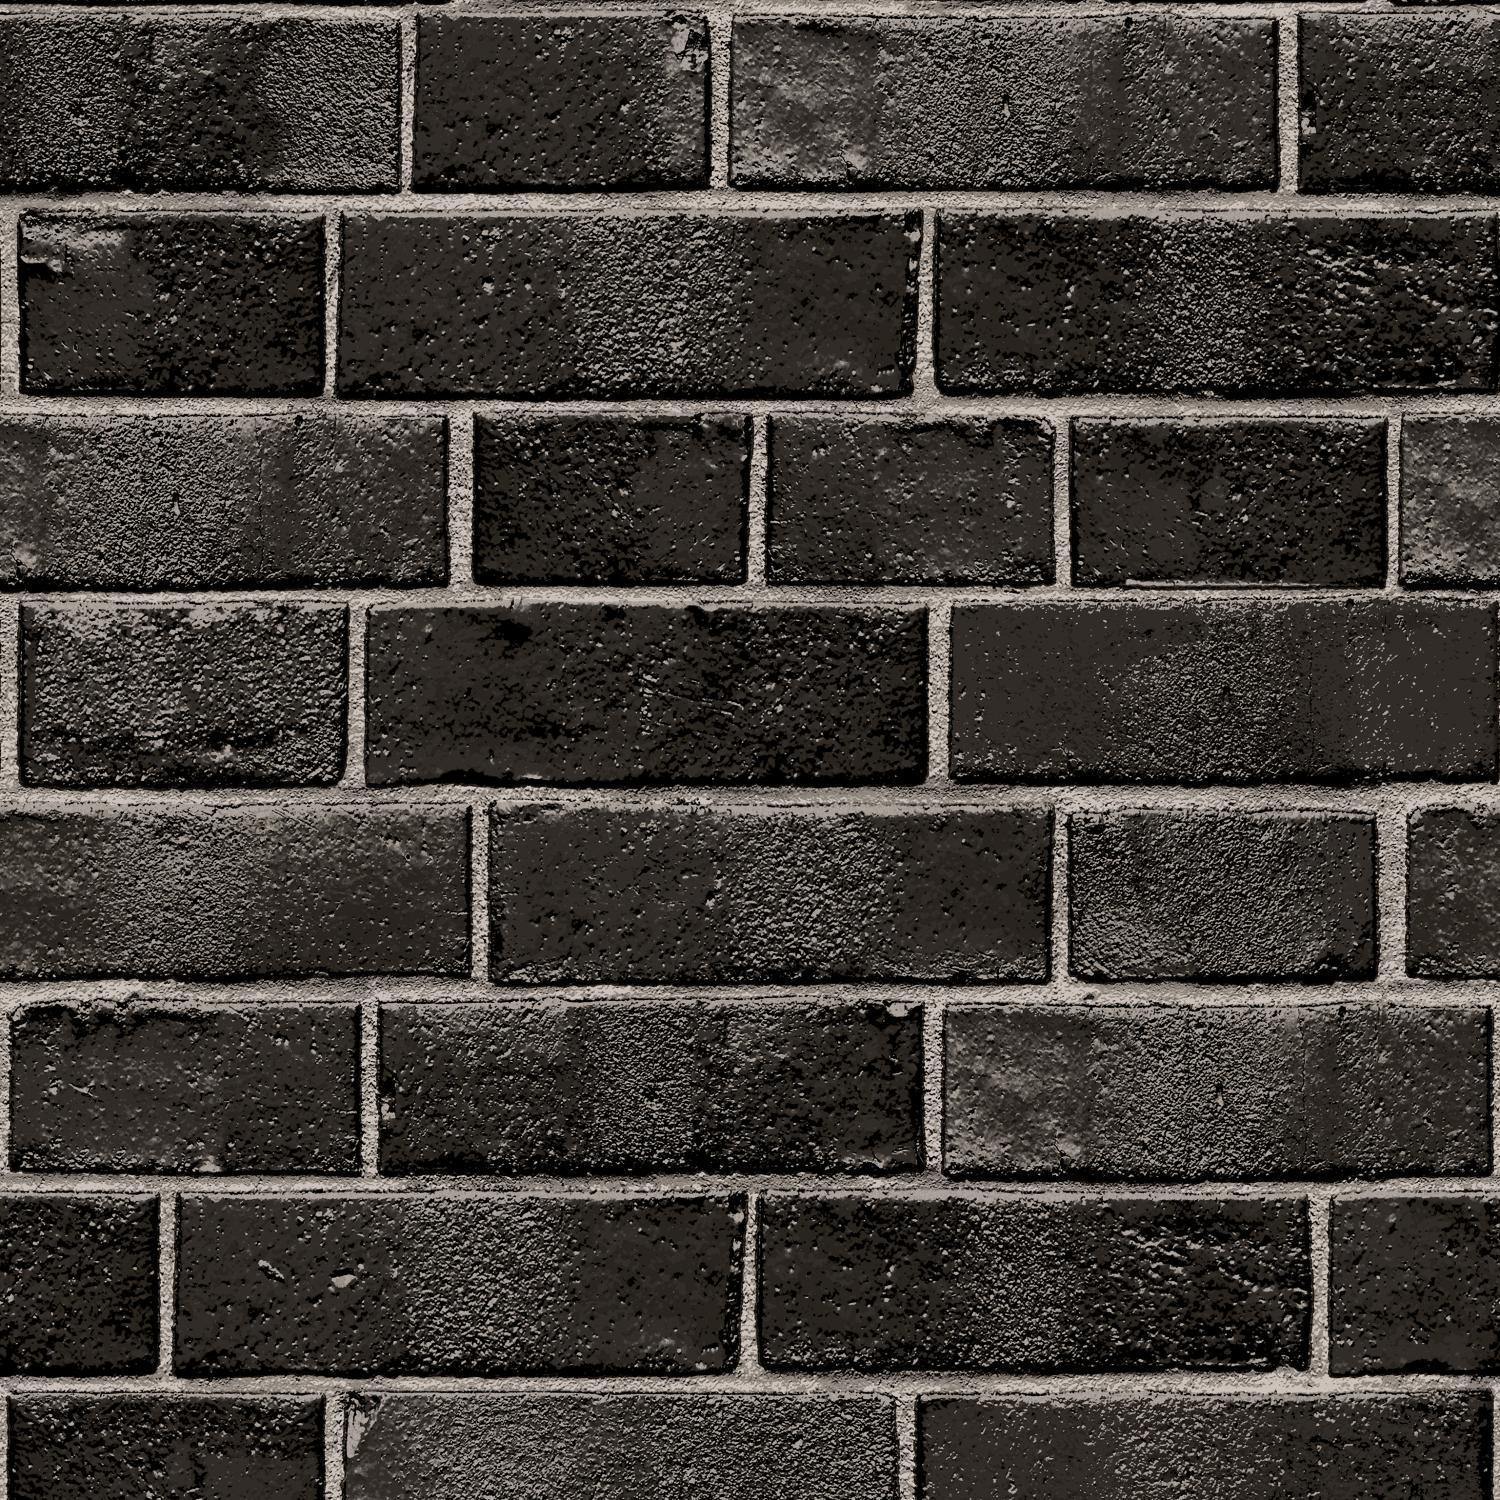 Tempaper Designs LIFESTYLE - Brick Ebony Peel and Stick Wallpaper